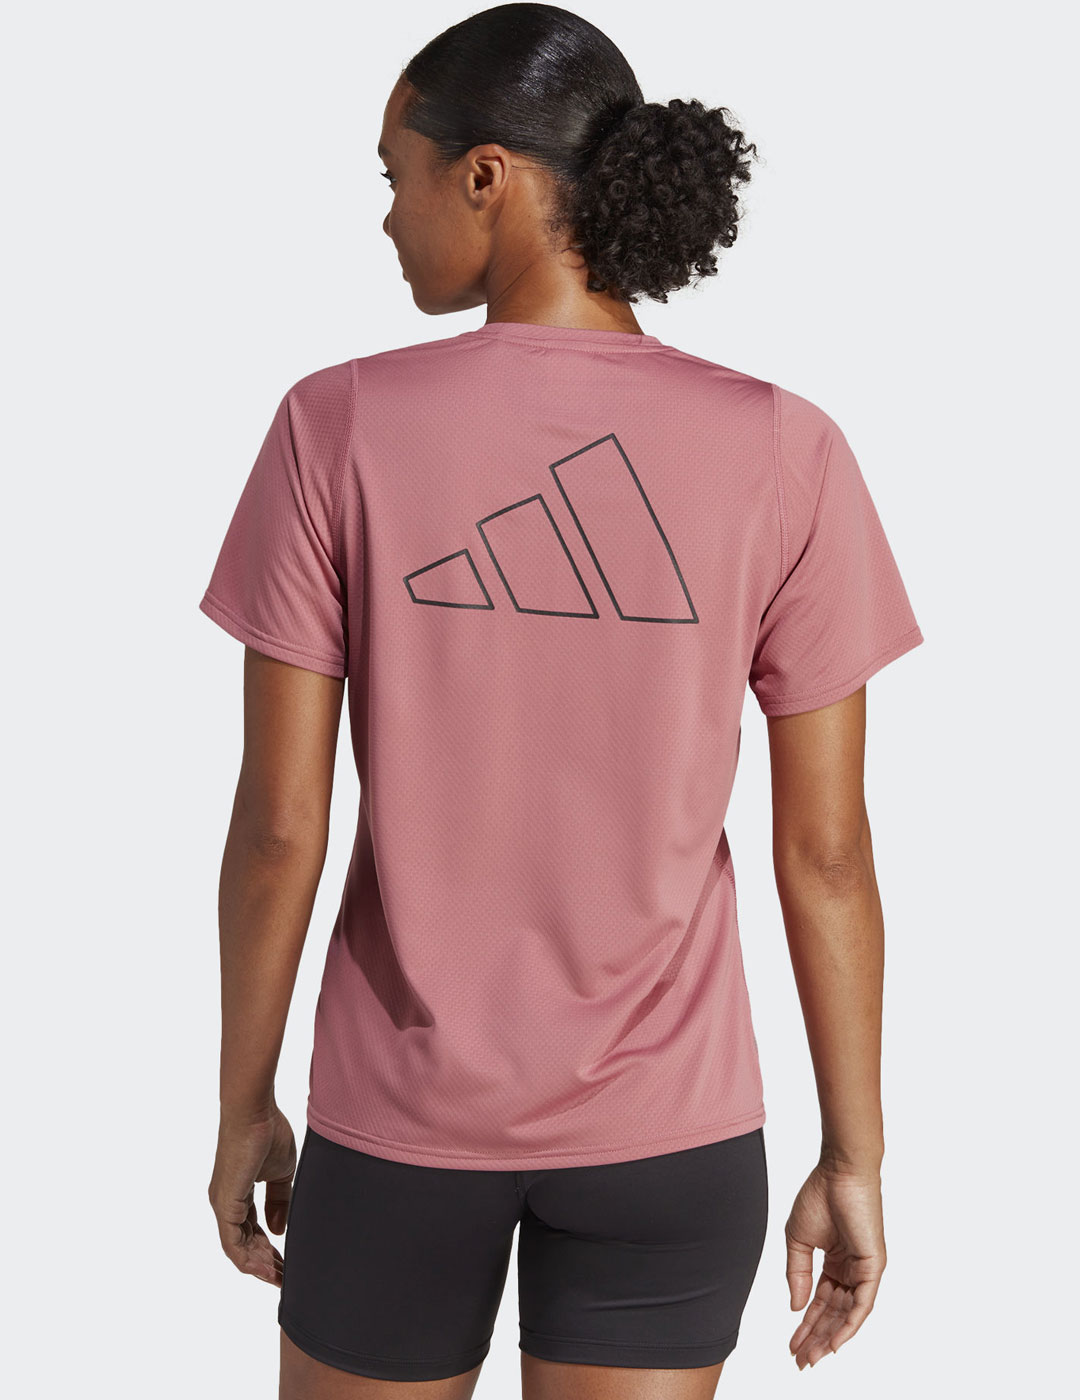 camiseta adidas manga corta mujer 3 bandas rosa-blanco